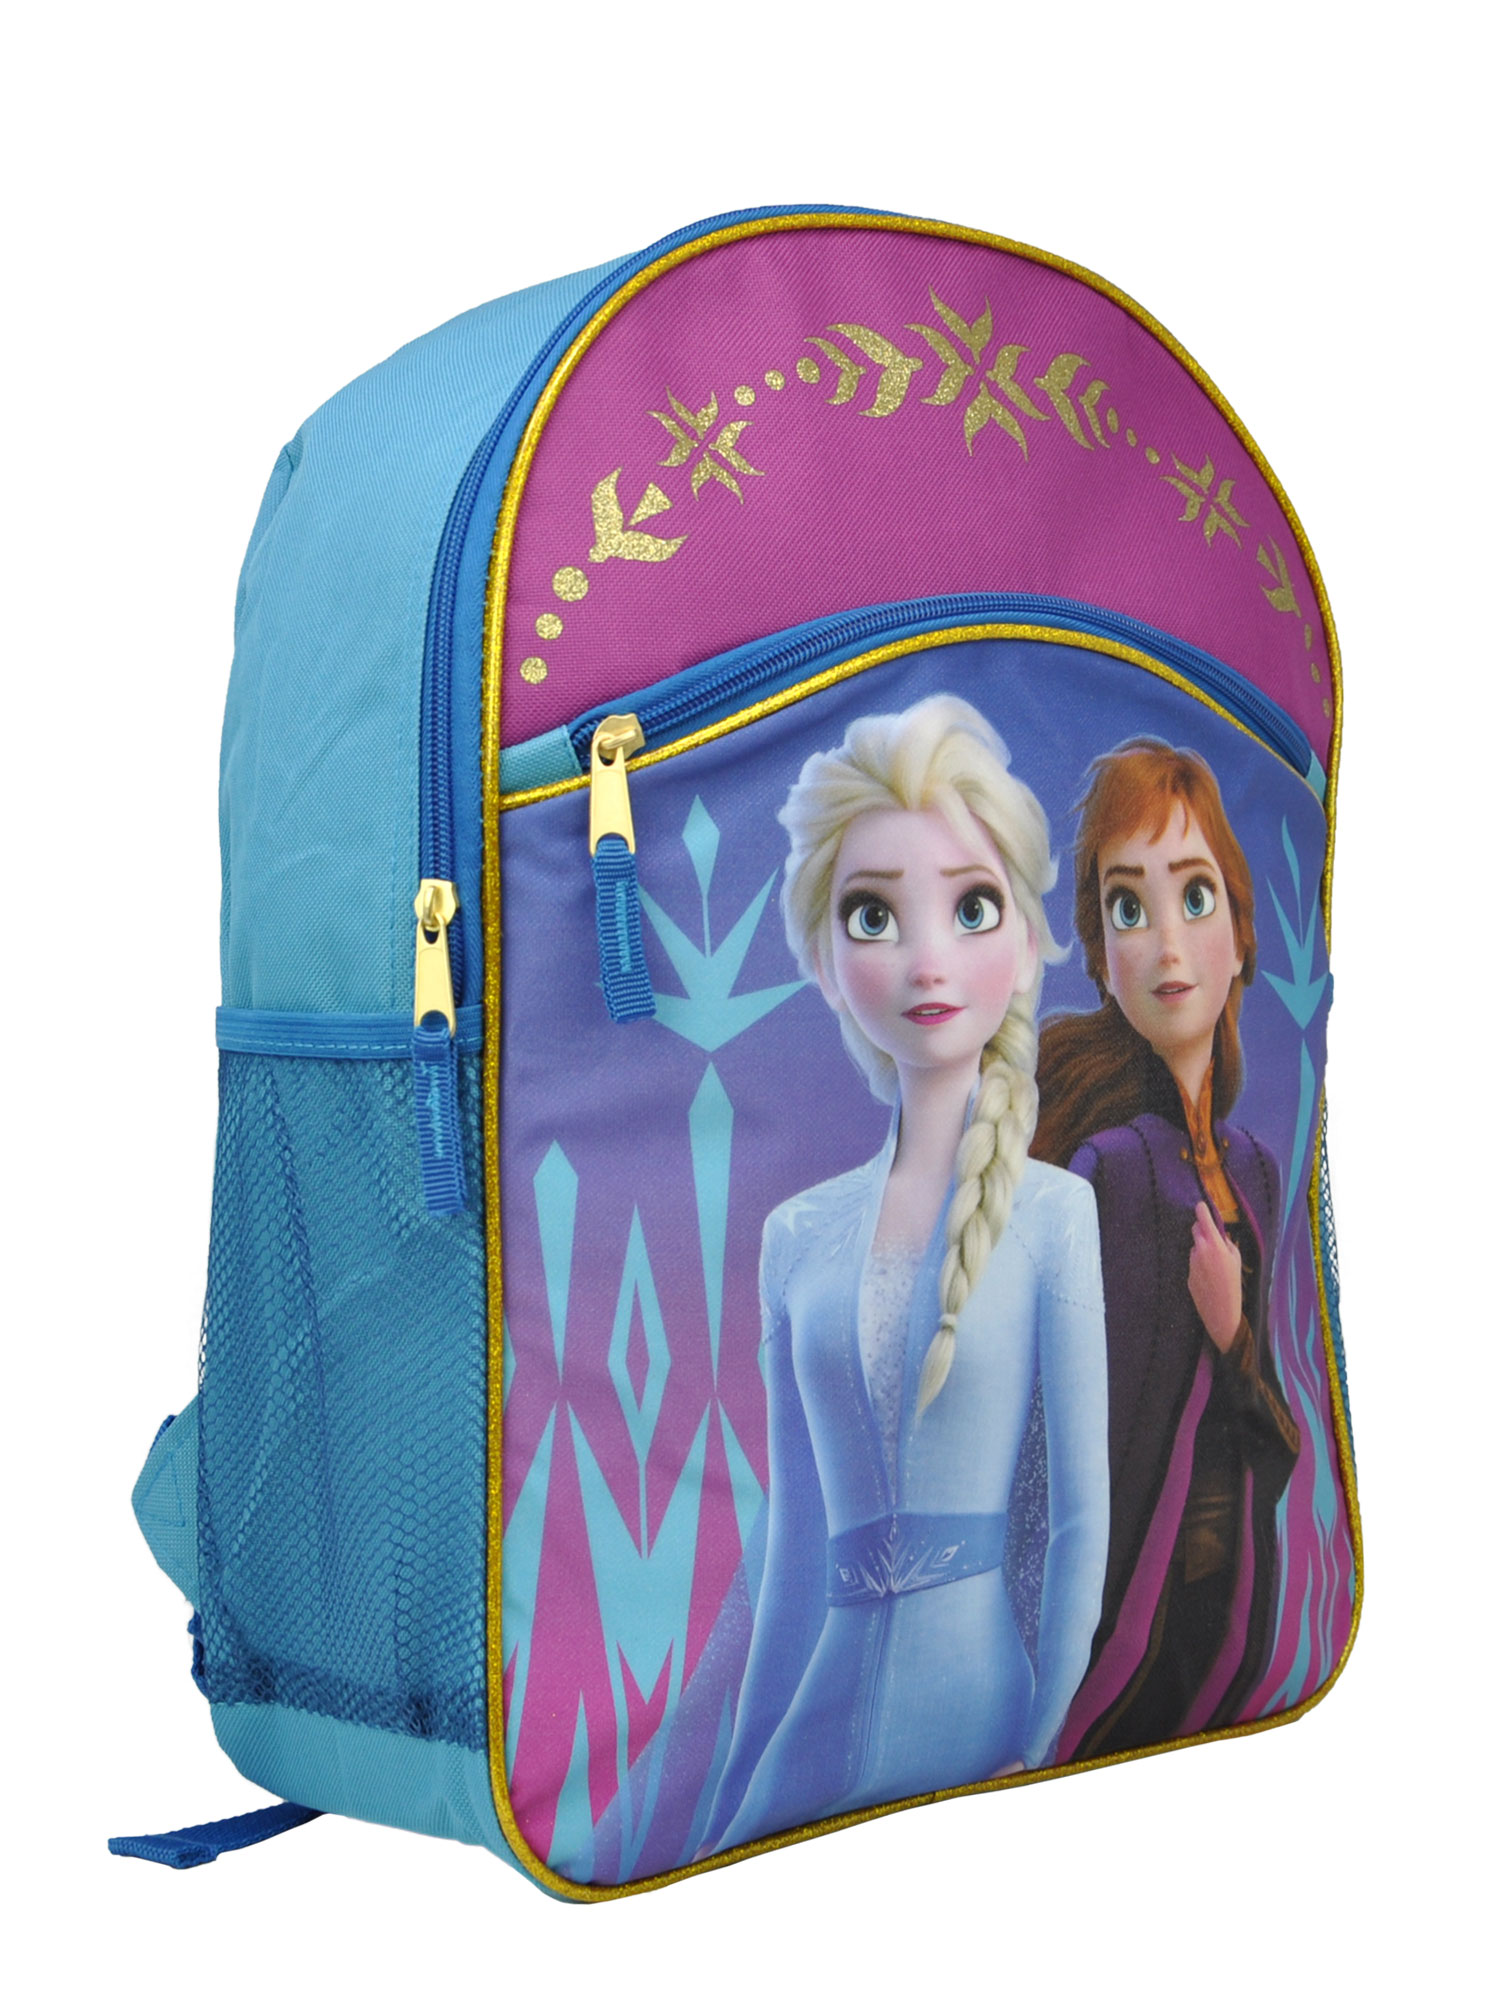 Disney Frozen II Elsa & Anna Large 16 Backpack Blue Purple - image 3 of 3